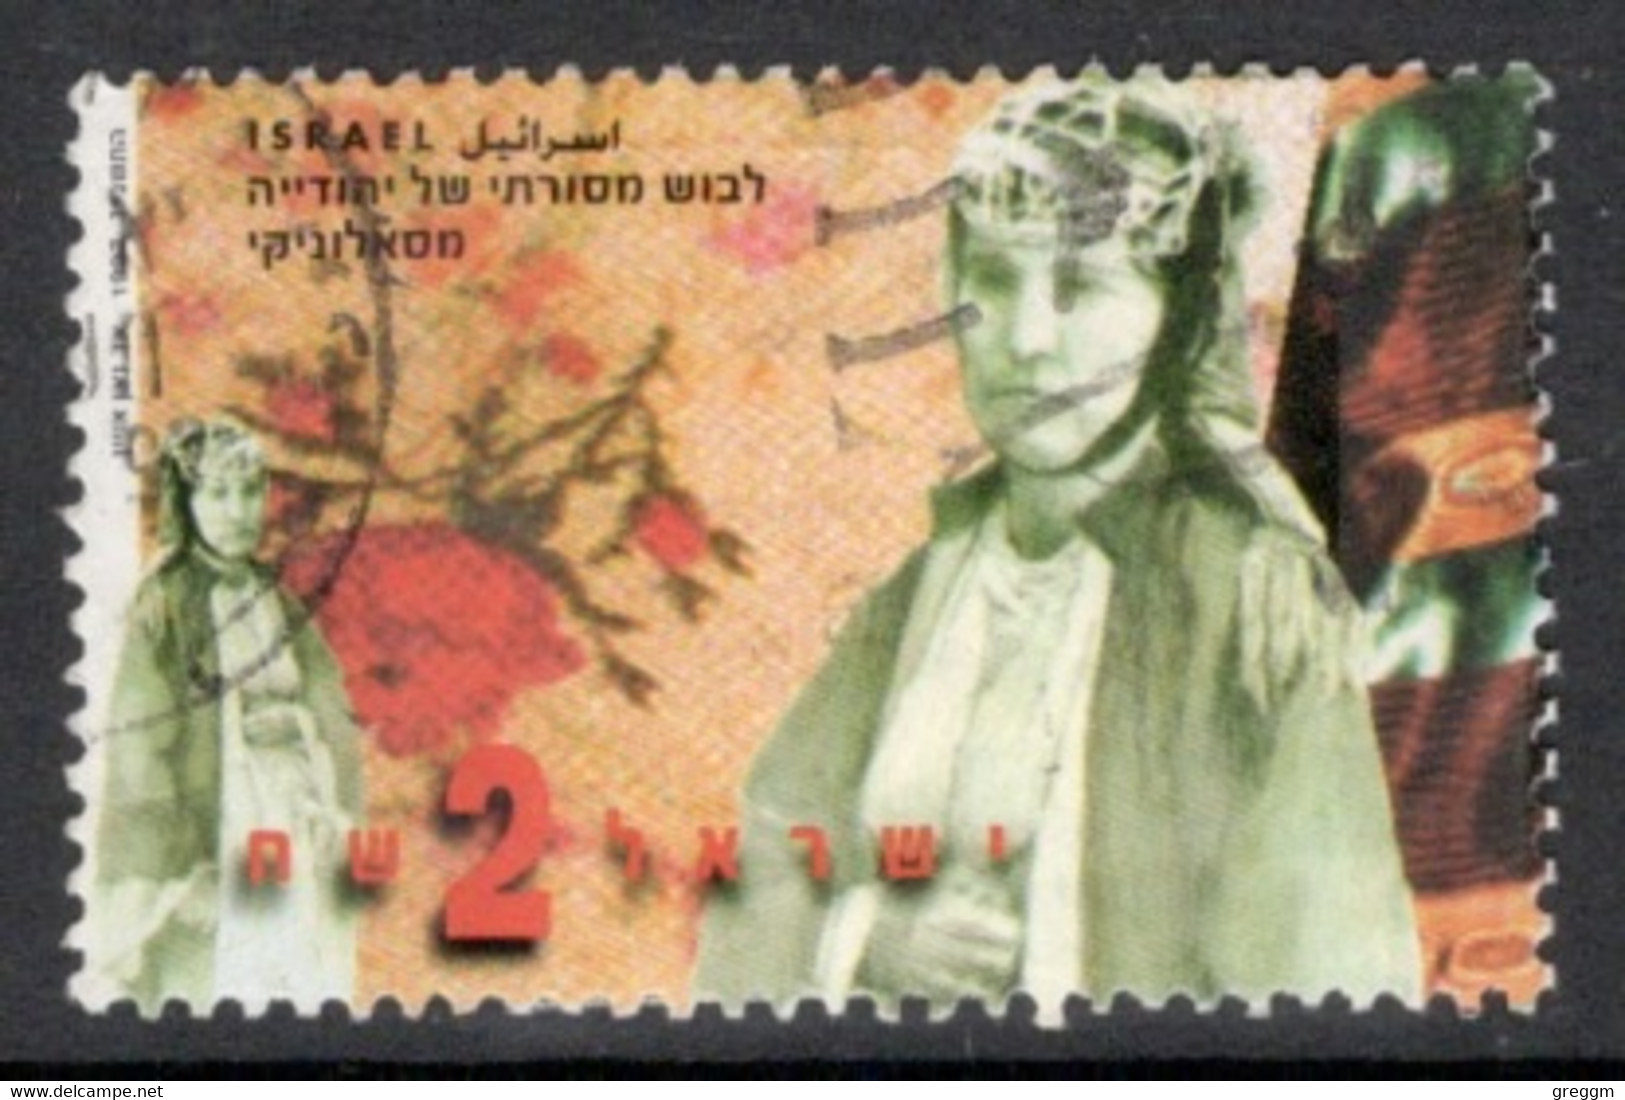 Israel 1997 Single Stamp Celebrating Traditional Costumes In Fine Used - Usati (senza Tab)